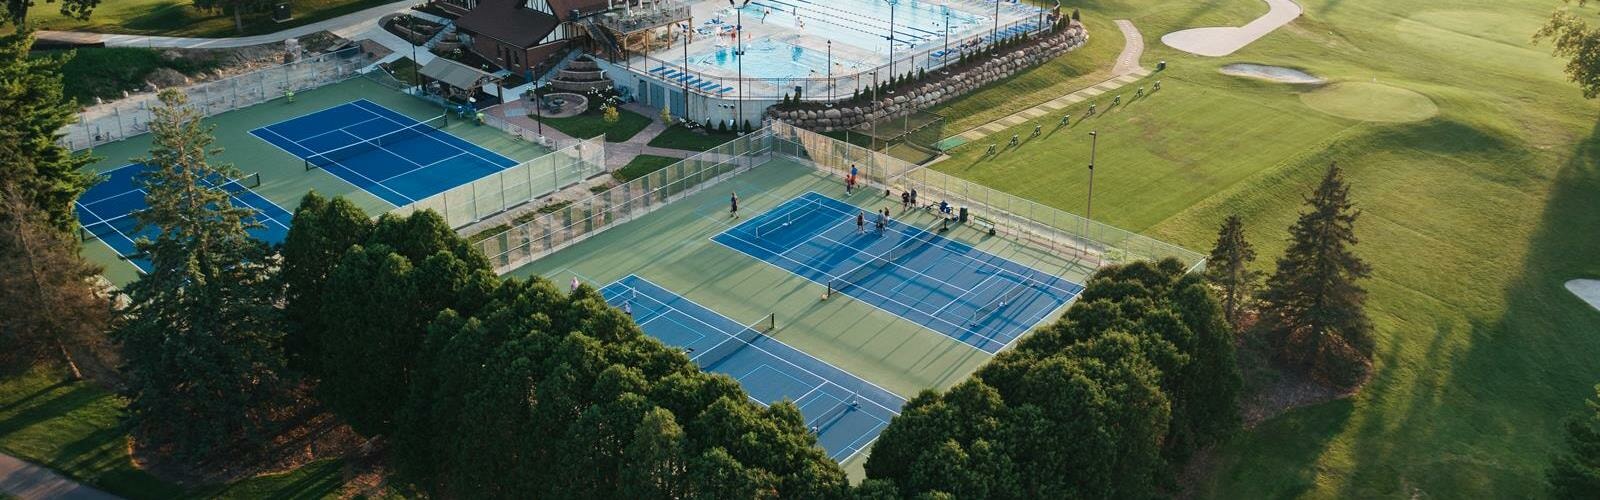 Tennis_Overview